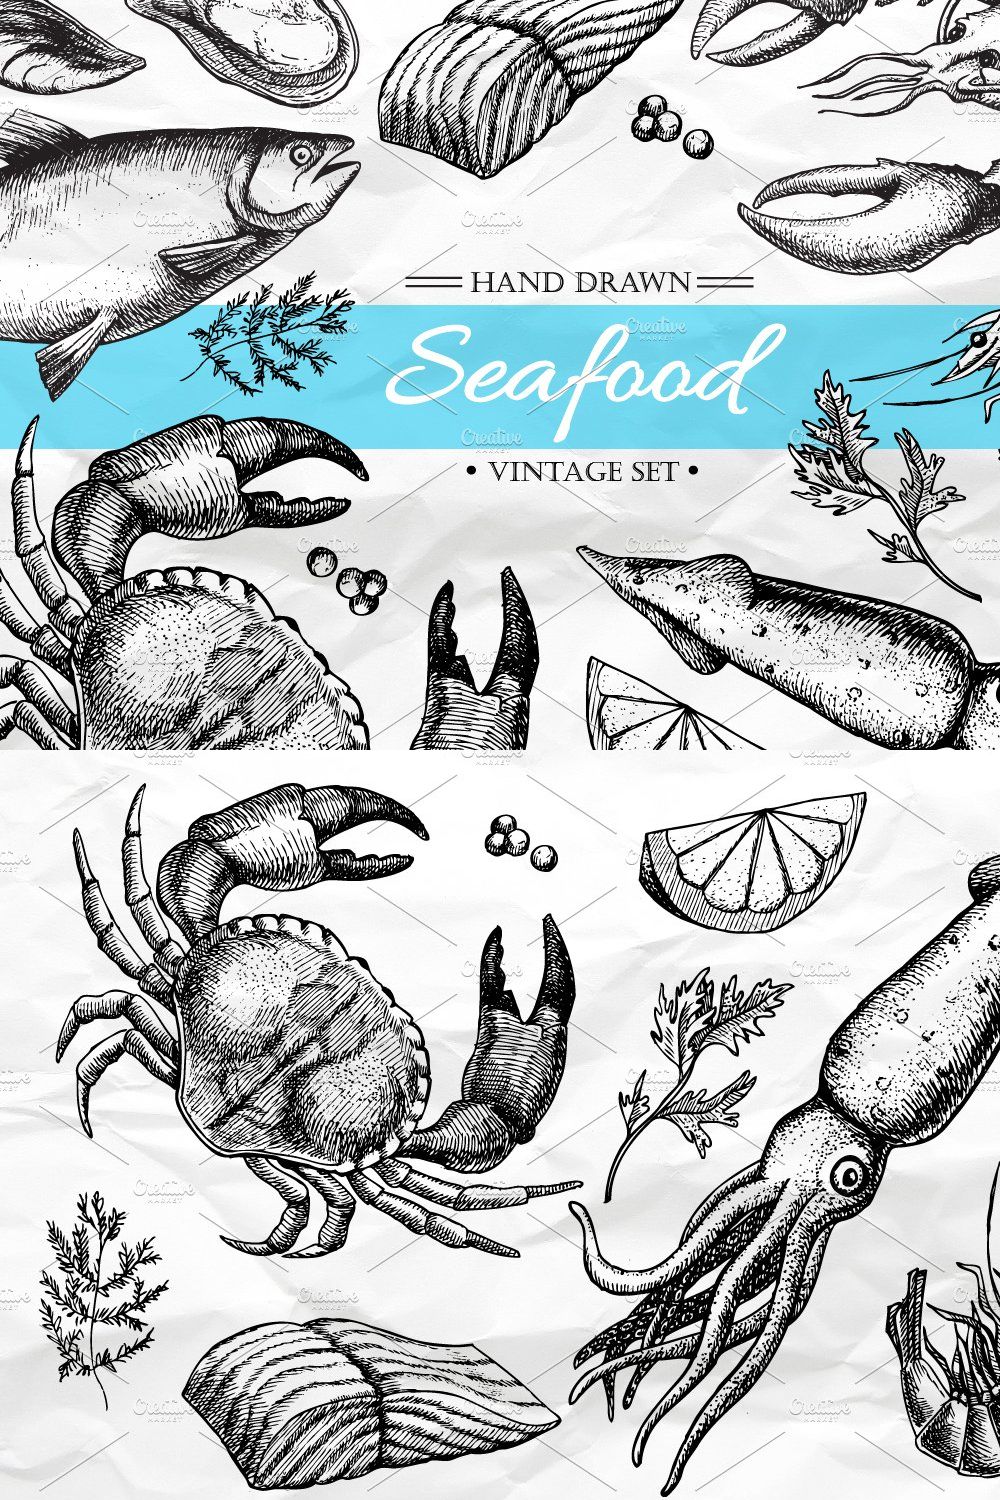 Seafood. Hand Drawn Vintage Set pinterest preview image.